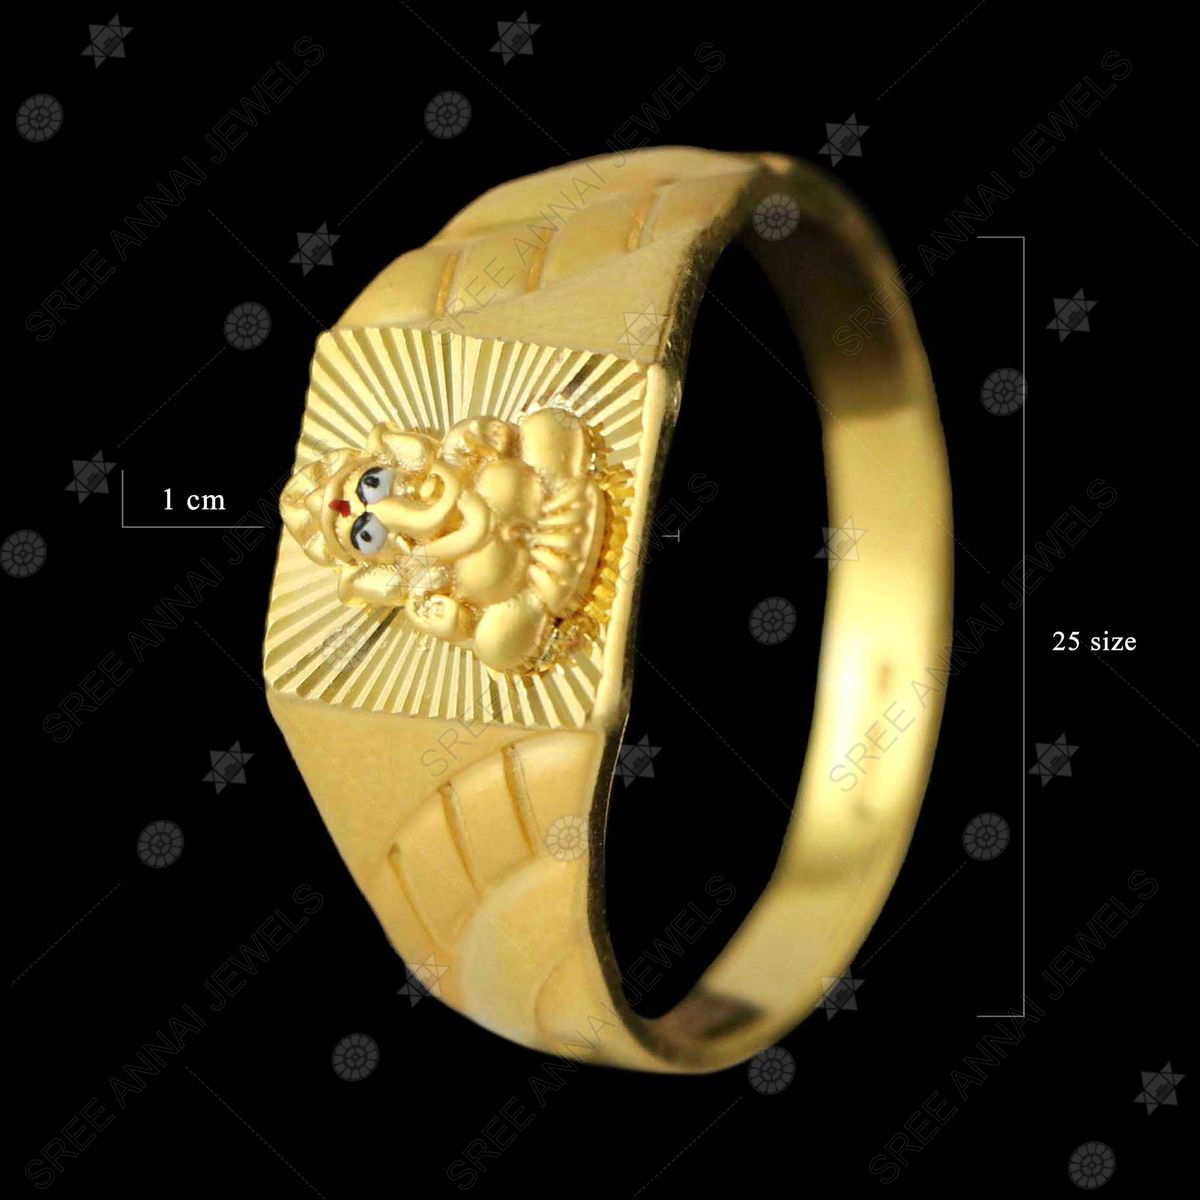 Gold Ring - Modern Serpent **Hybrid Finish** - 5.5 Grams, 24K Pure - Medium